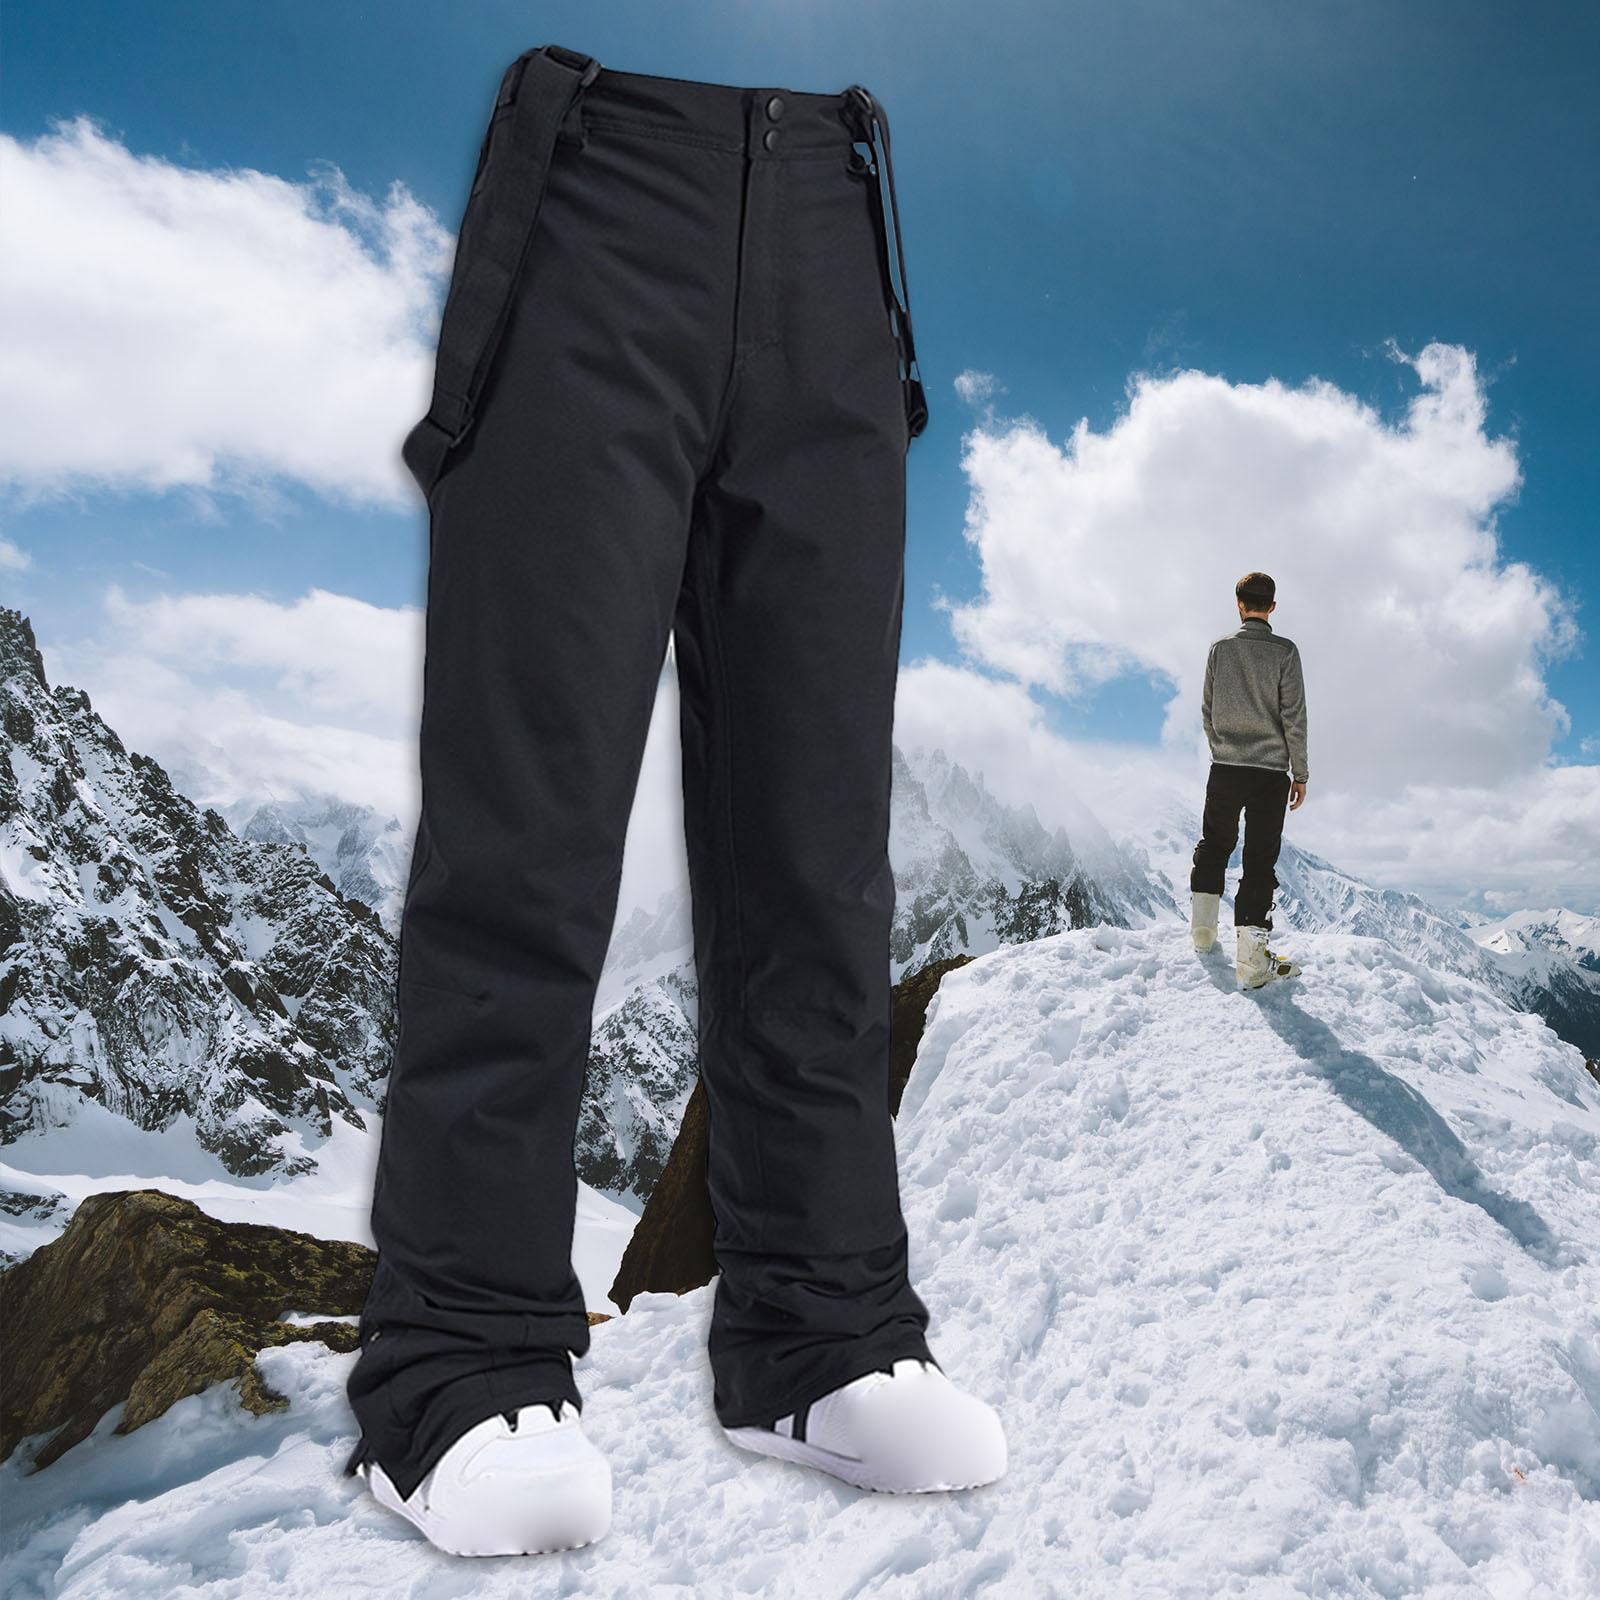 Black snow bibs, pants, lightweight, water, wind full length pants for M 